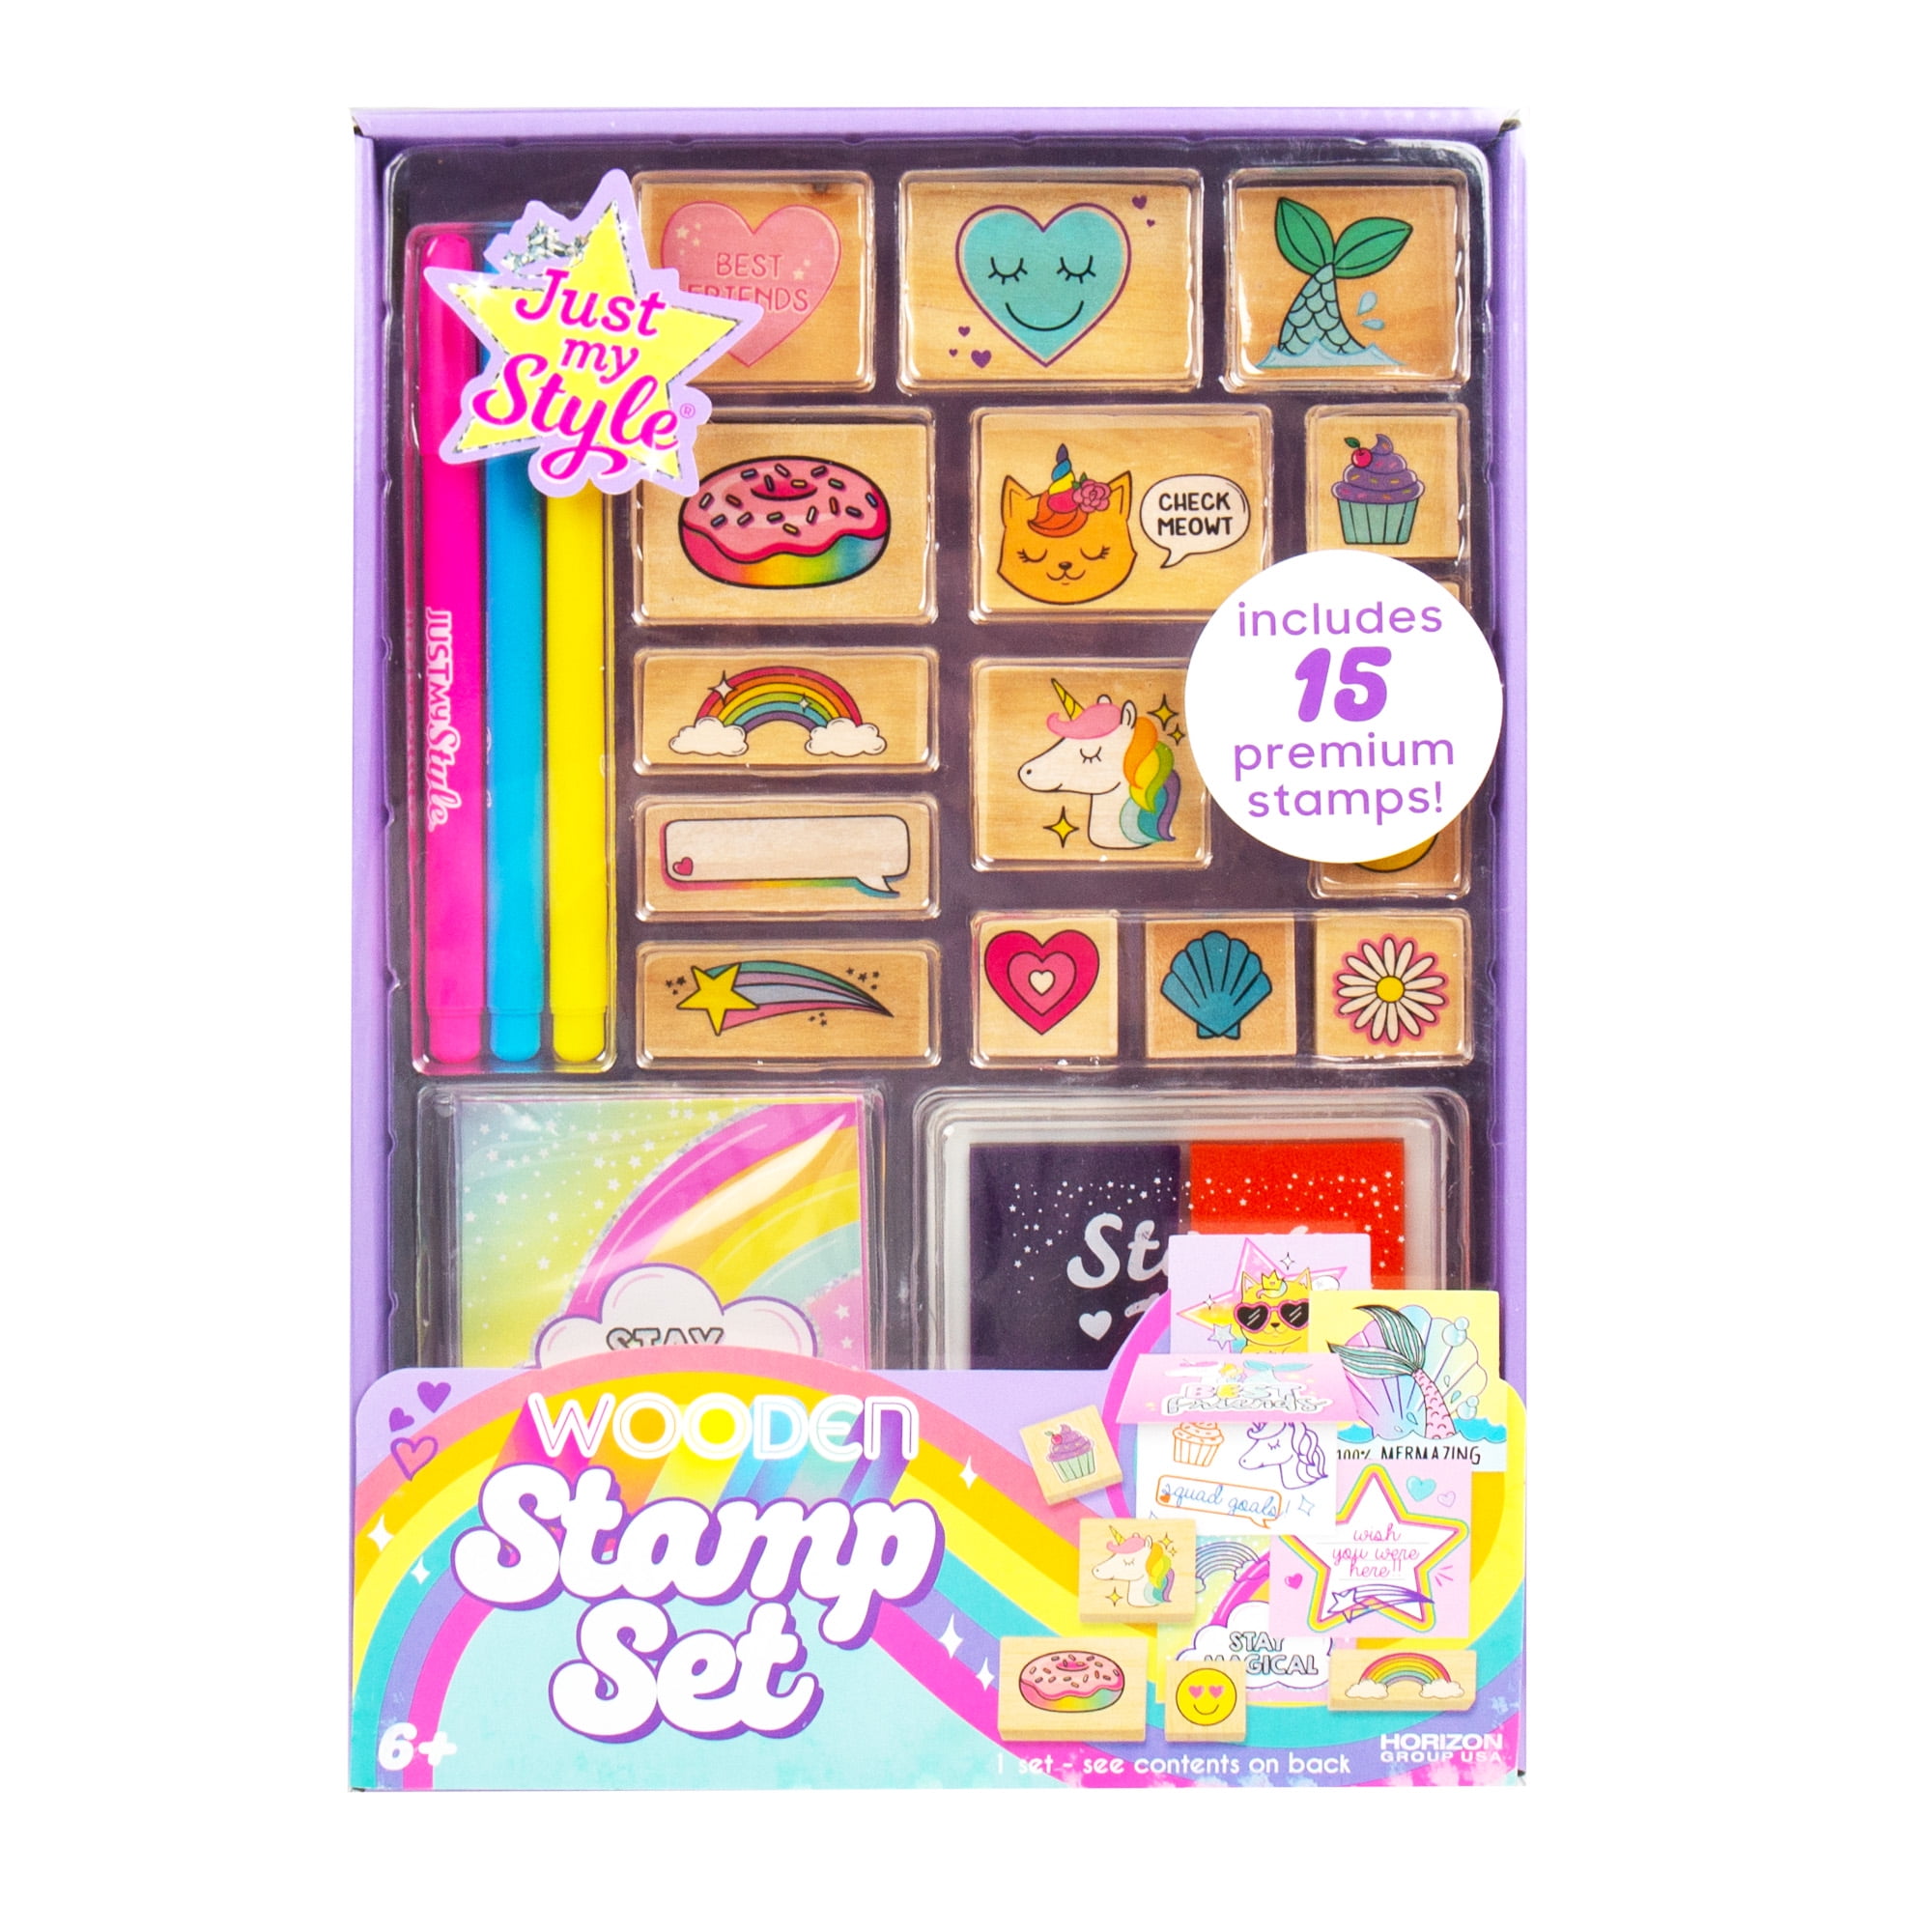 THe Cutest, Littlest DIY Stamp Making Kit for Only $4.99 - IVE BEEN FRAMED